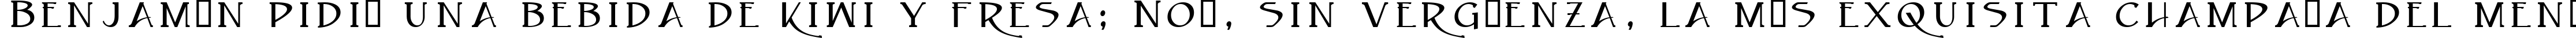 Пример написания шрифтом Caeldera текста на испанском